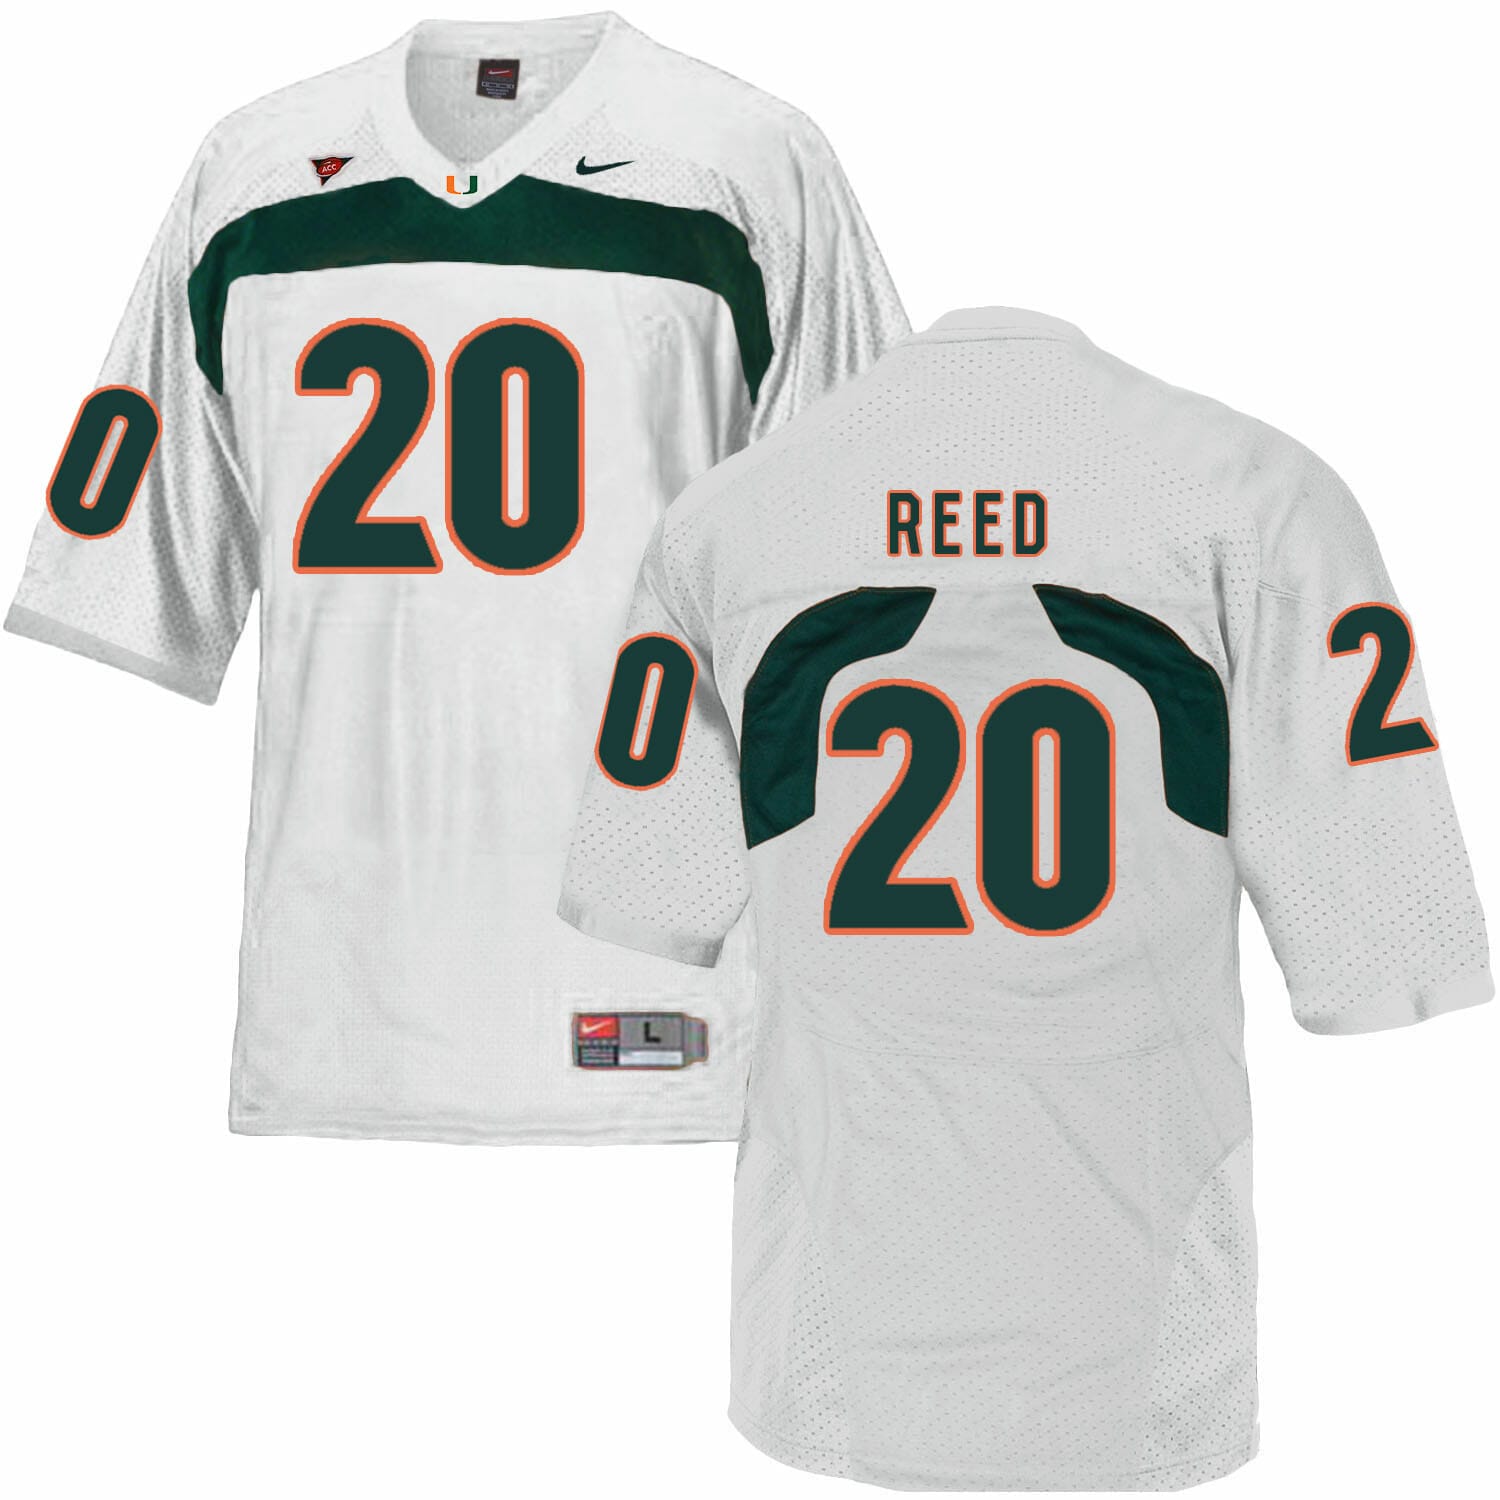 Ed Reed Miami Jersey Hurricanes #20 NCAA College Football White